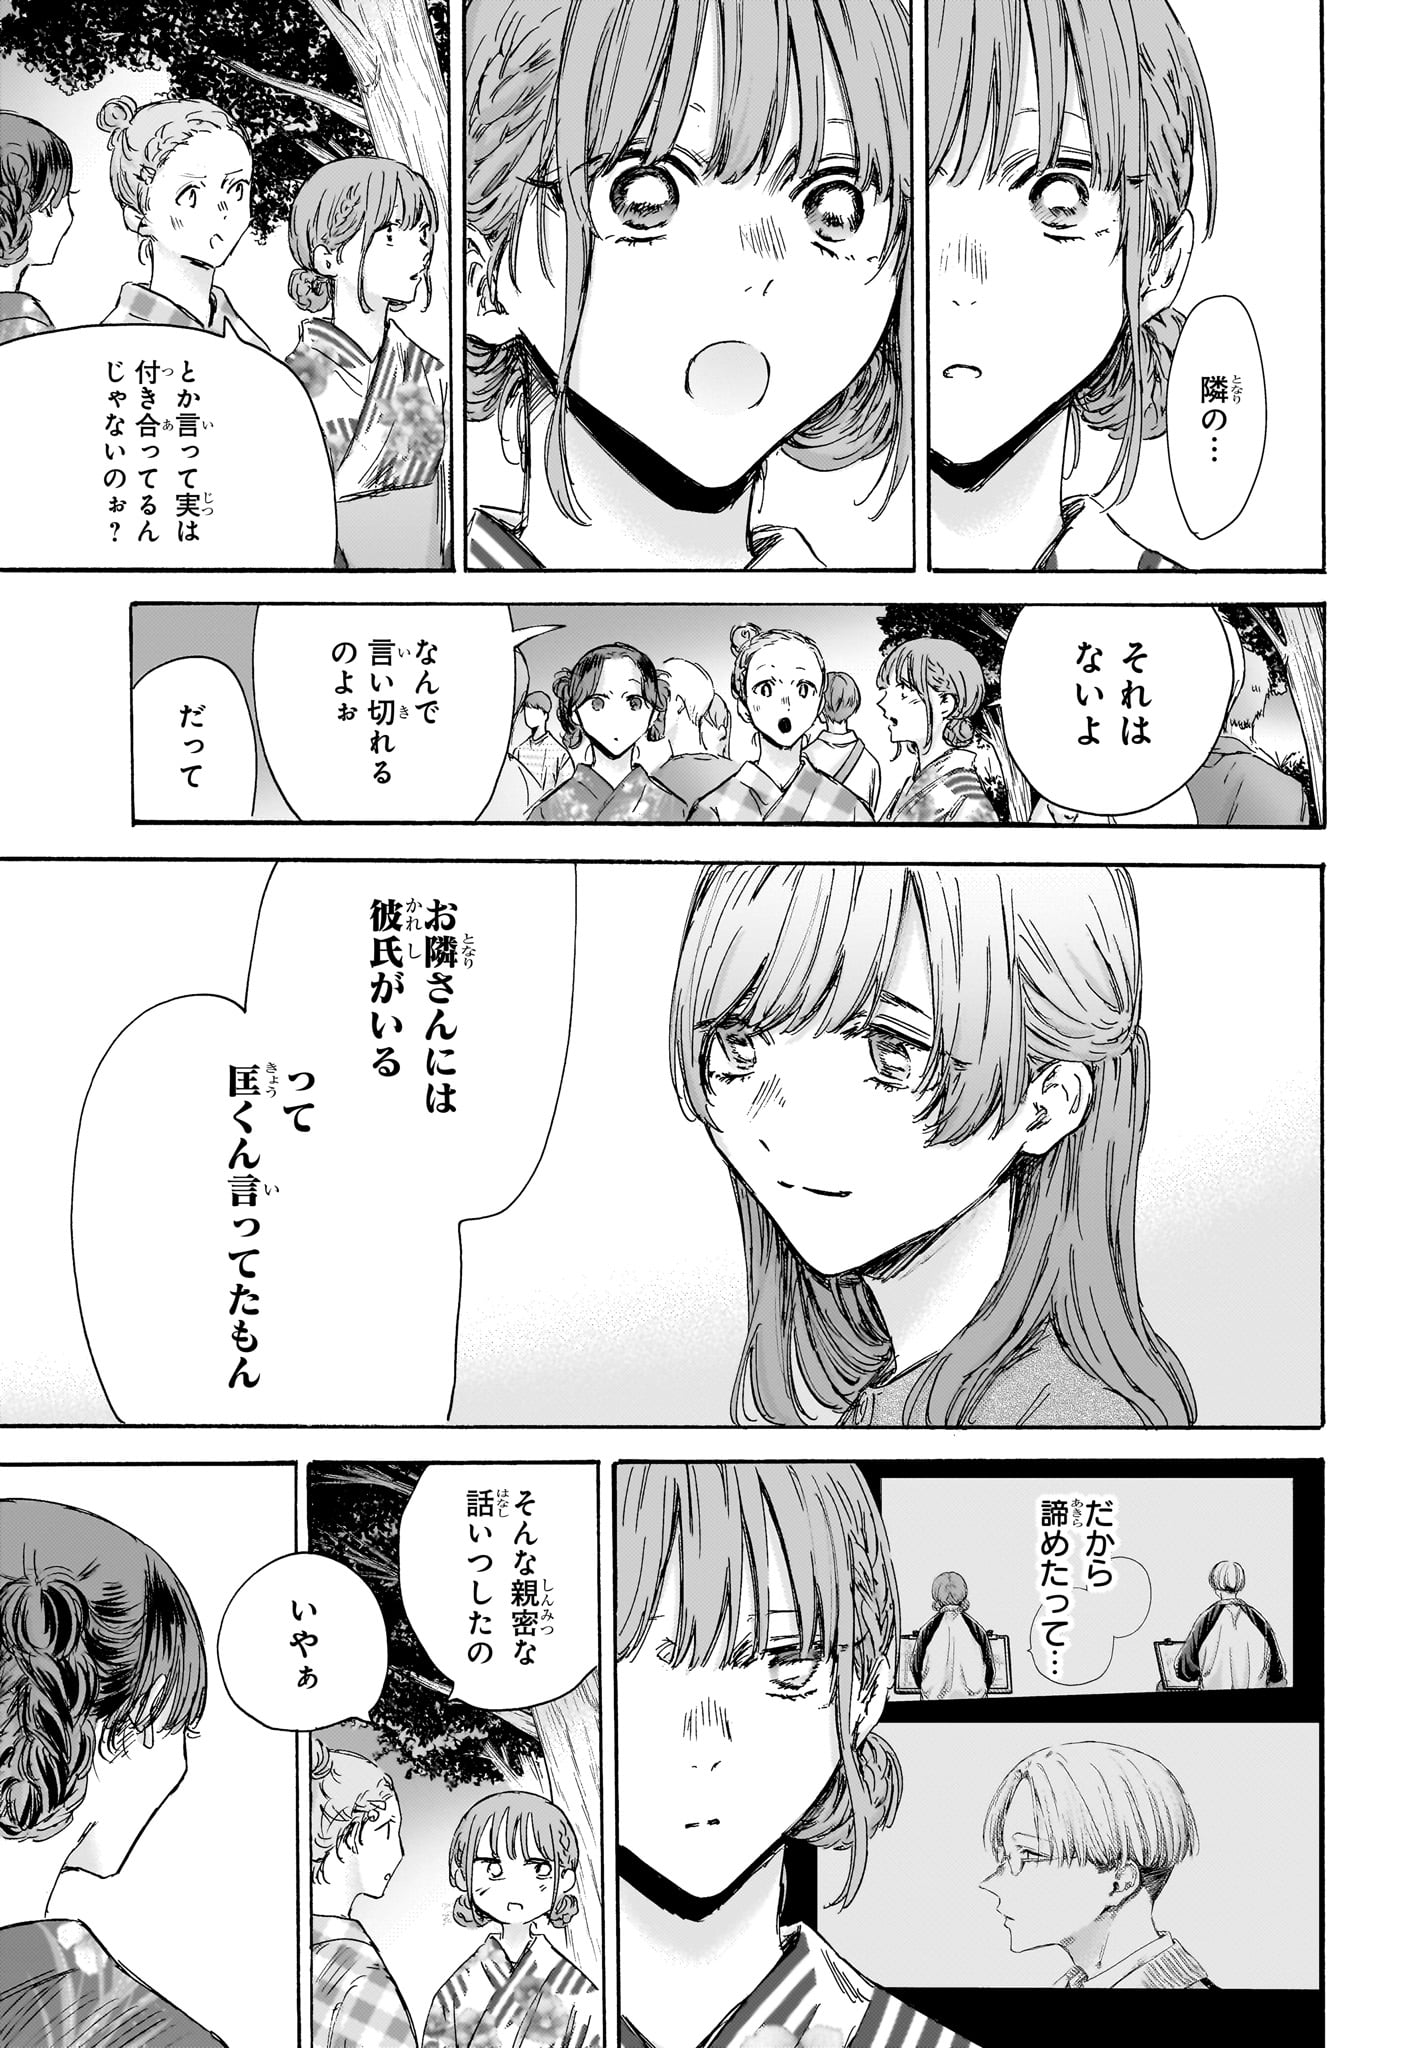 Ao no Hako - Chapter 148 - Page 5